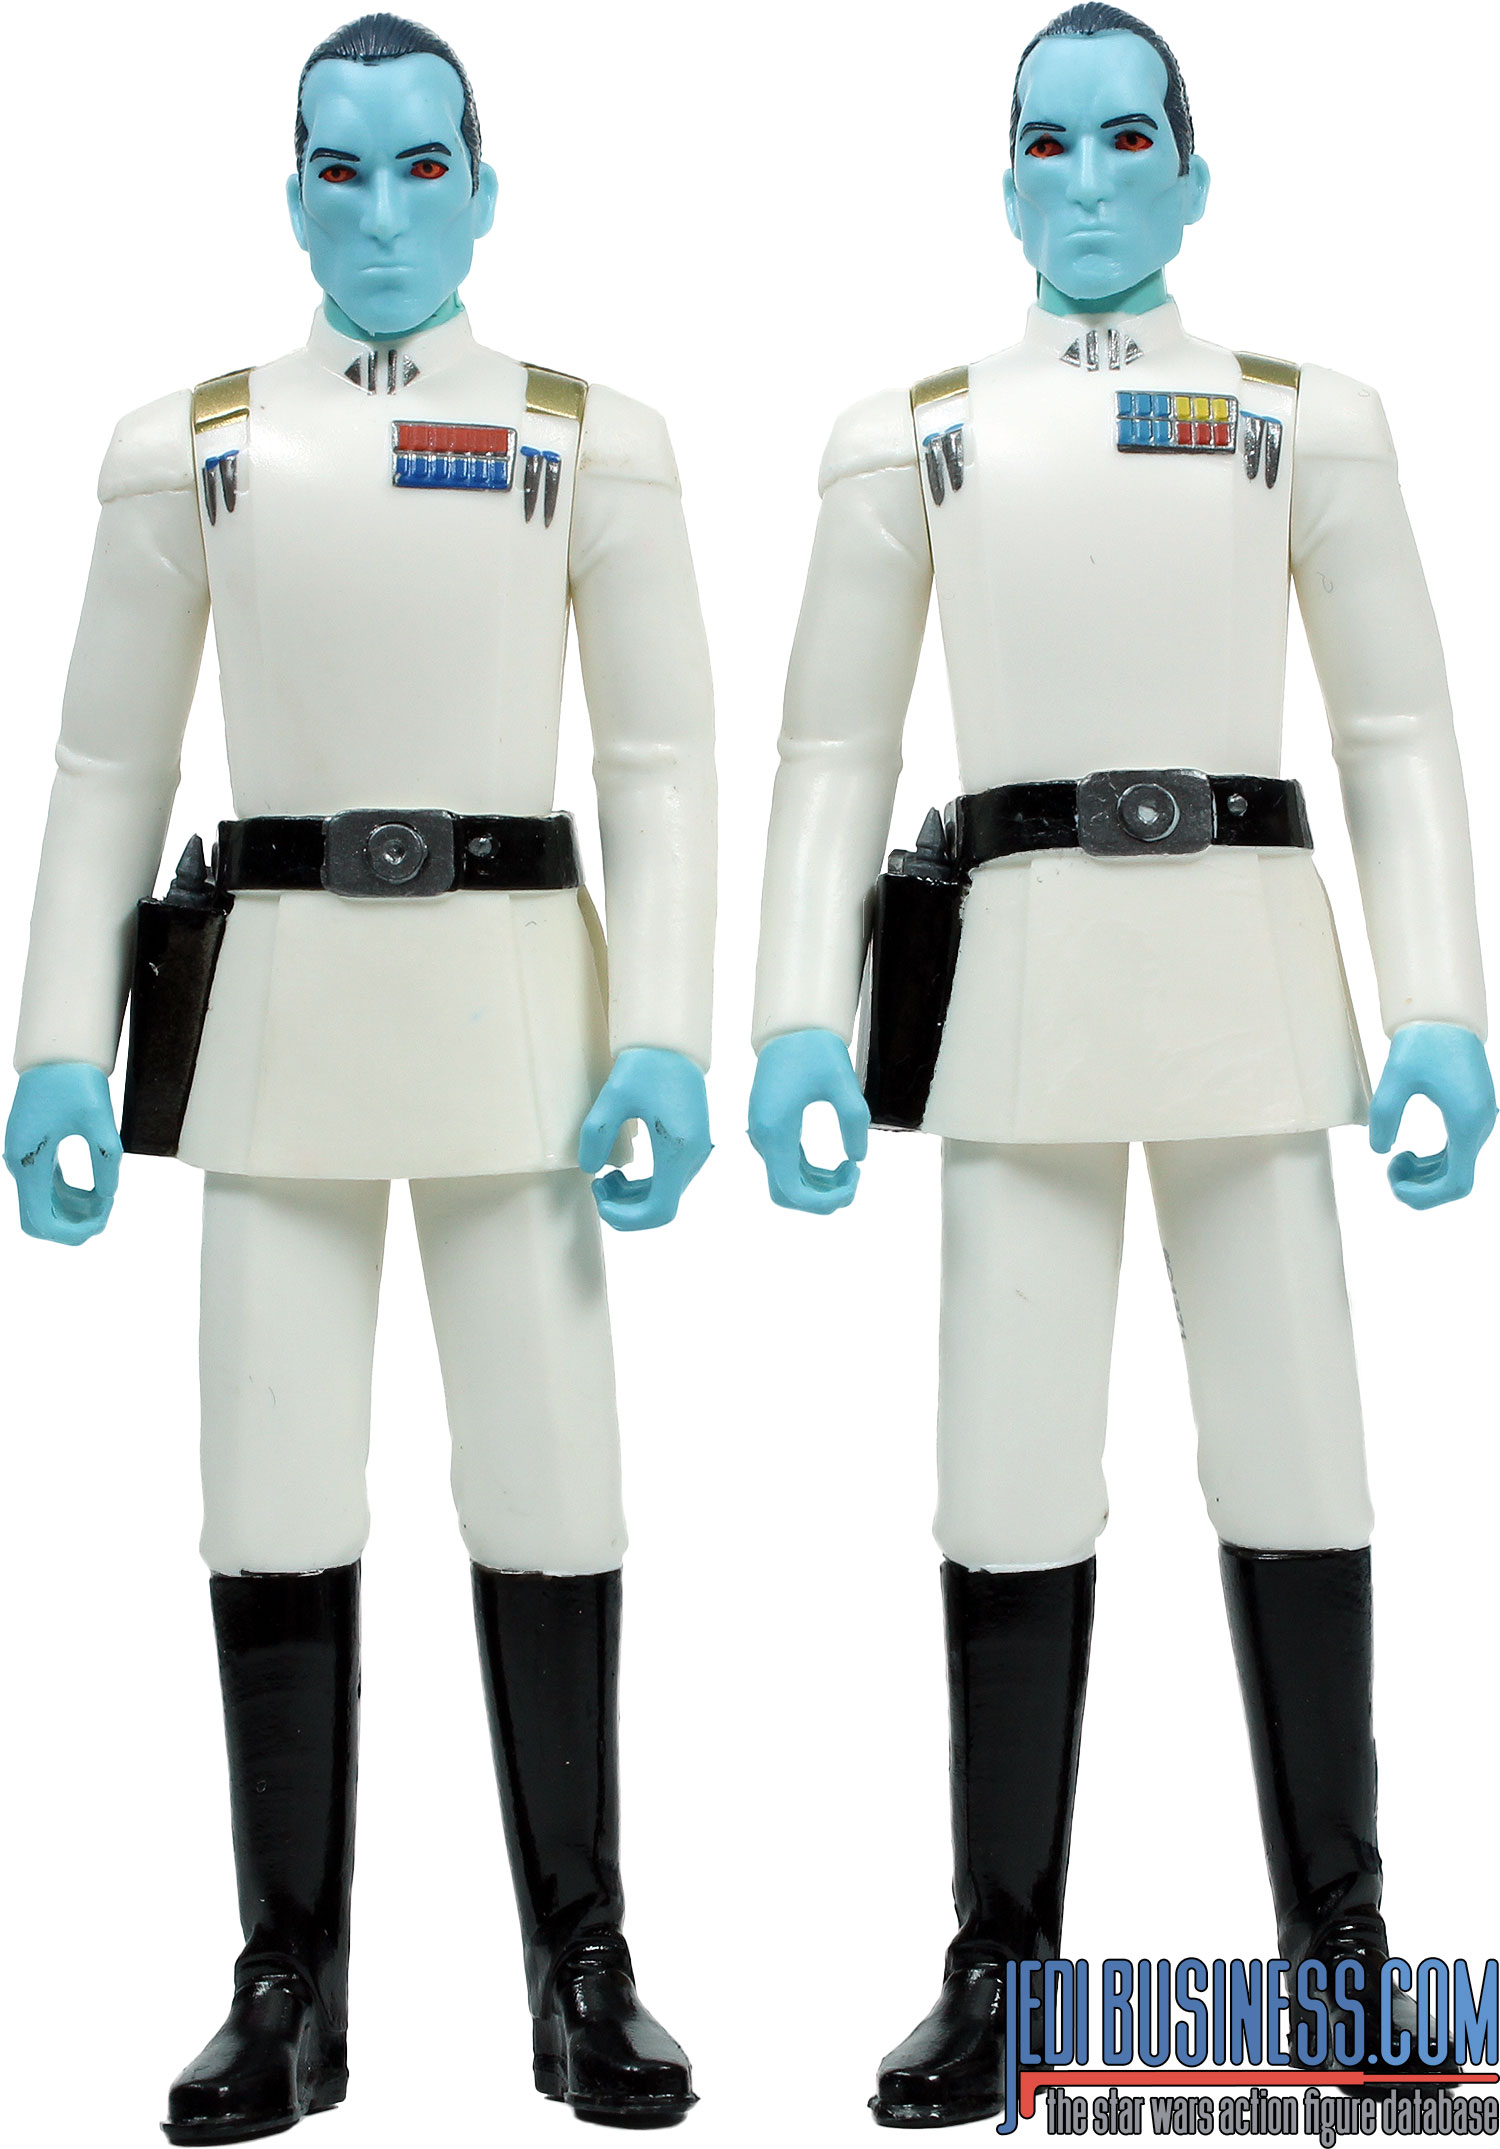 Admiral Thrawn Star Wars Rebels